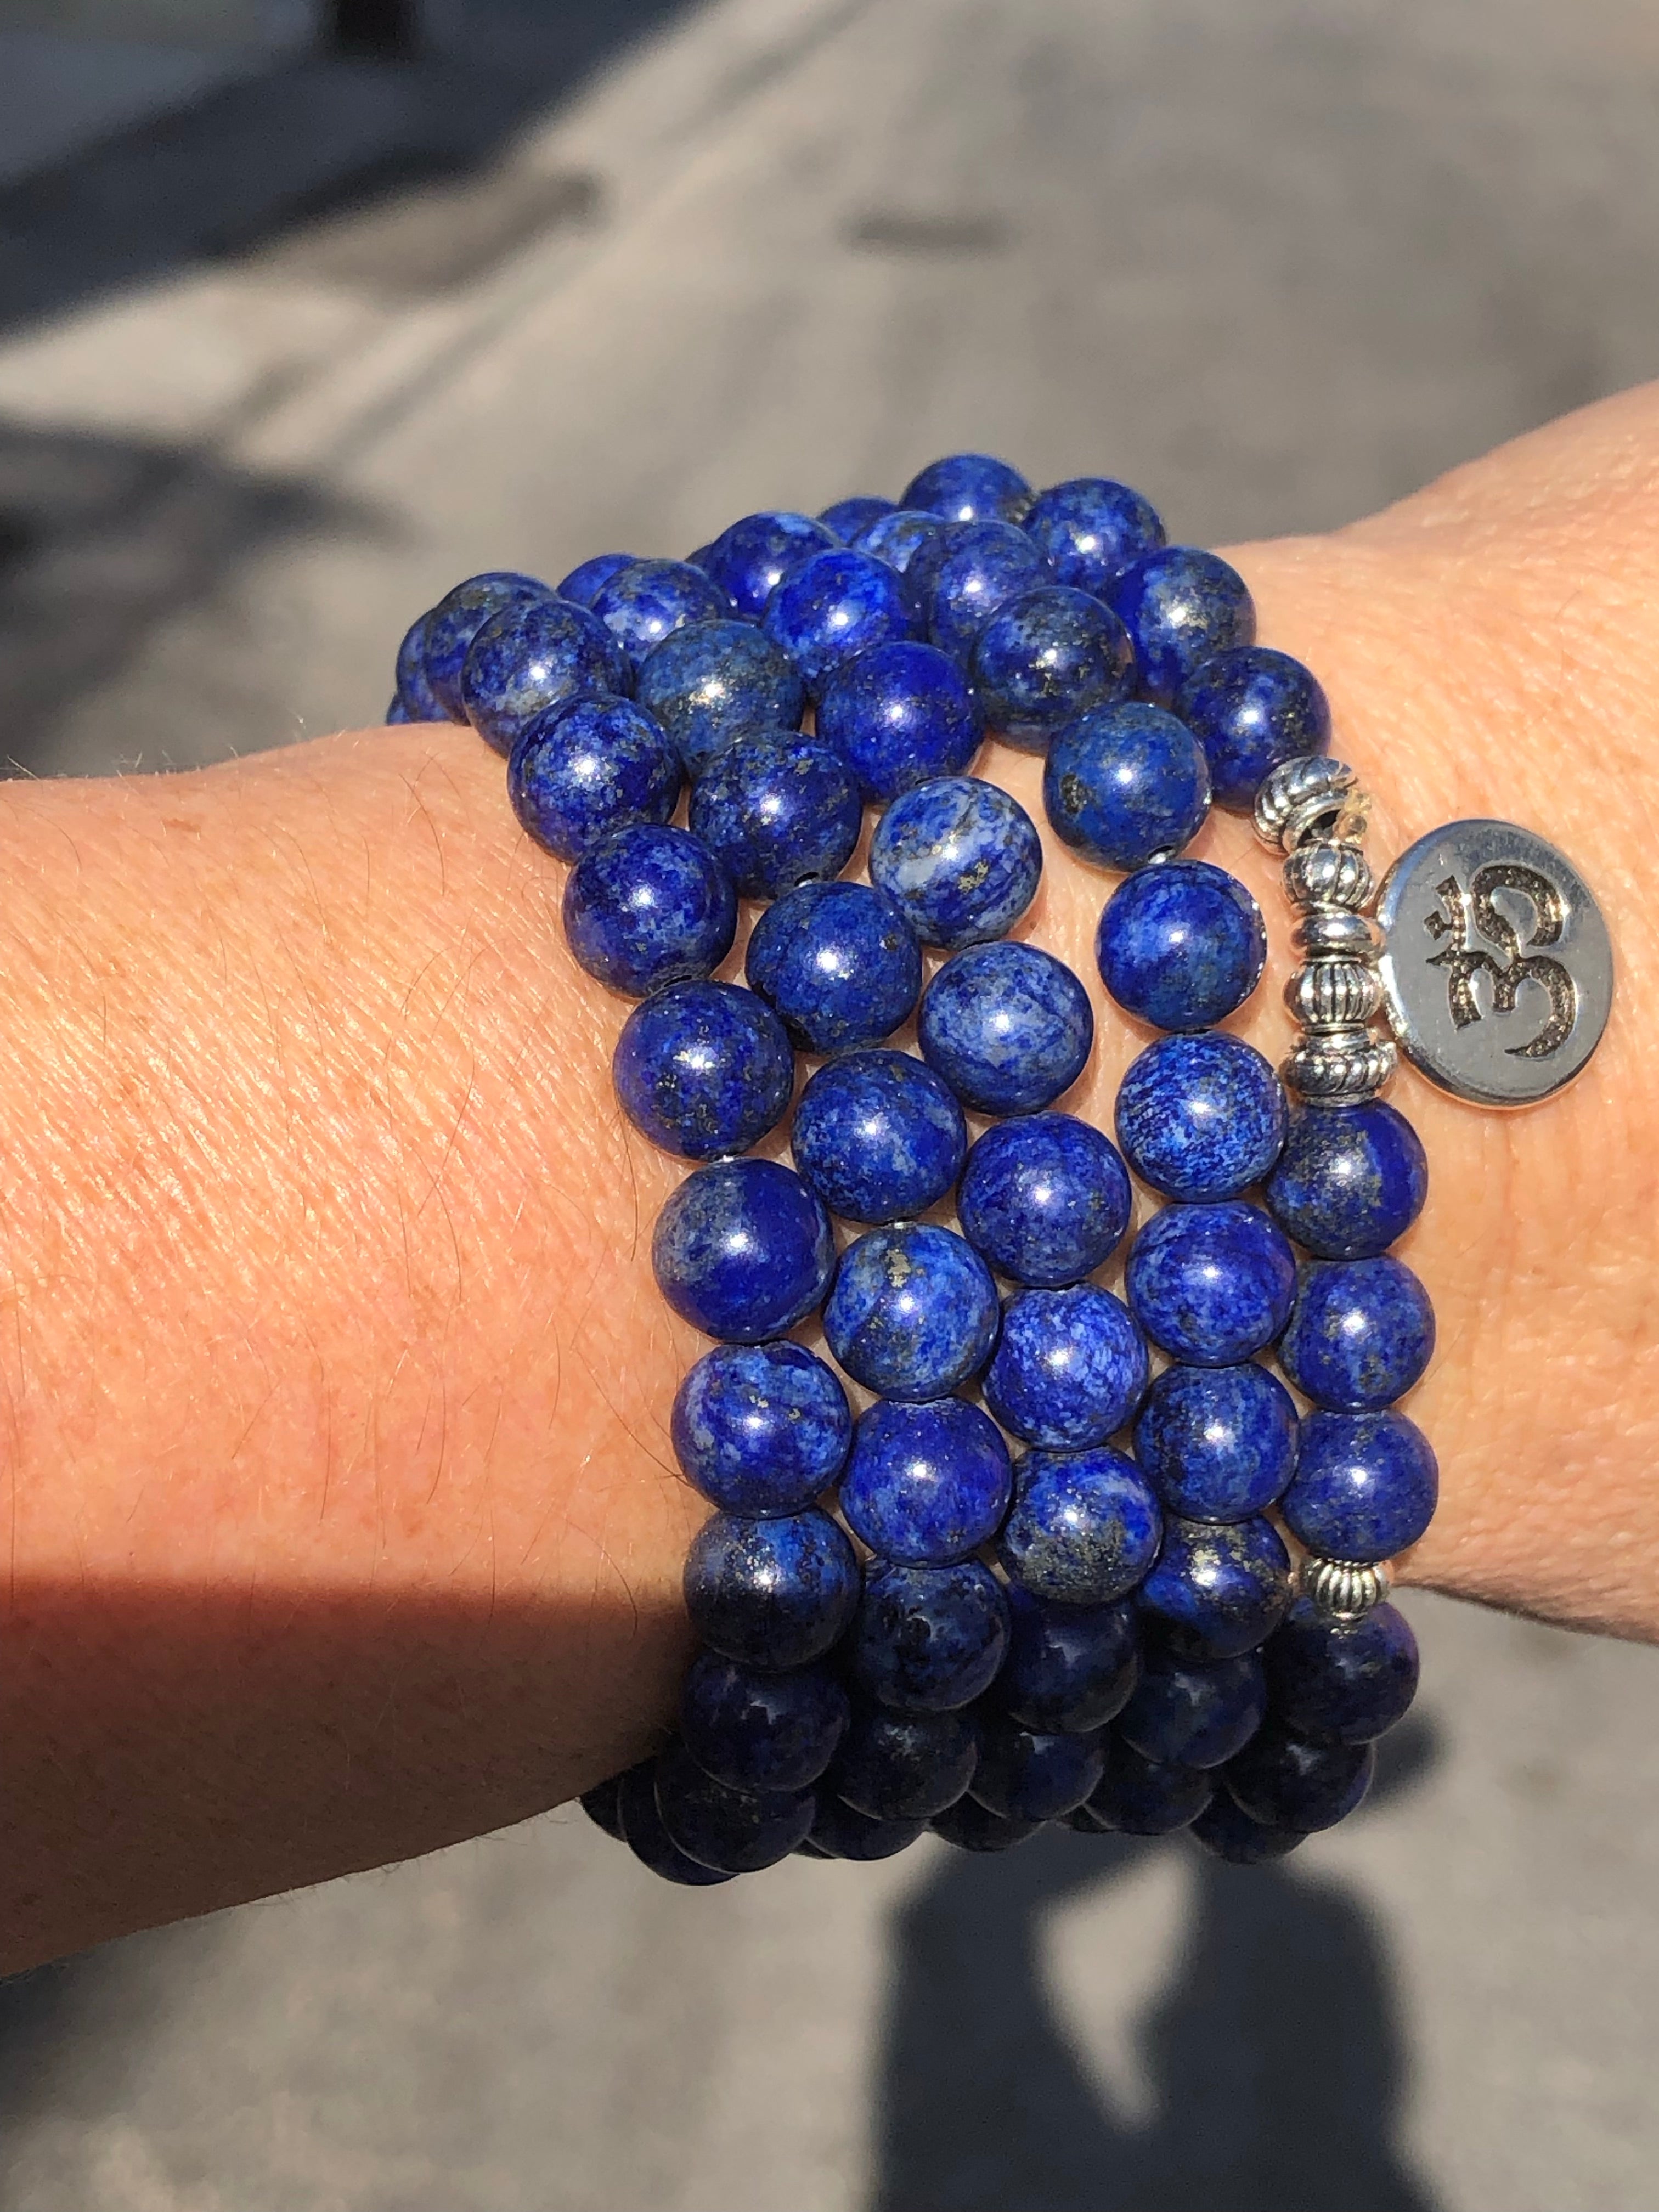 Lapis lazuli beads with charm